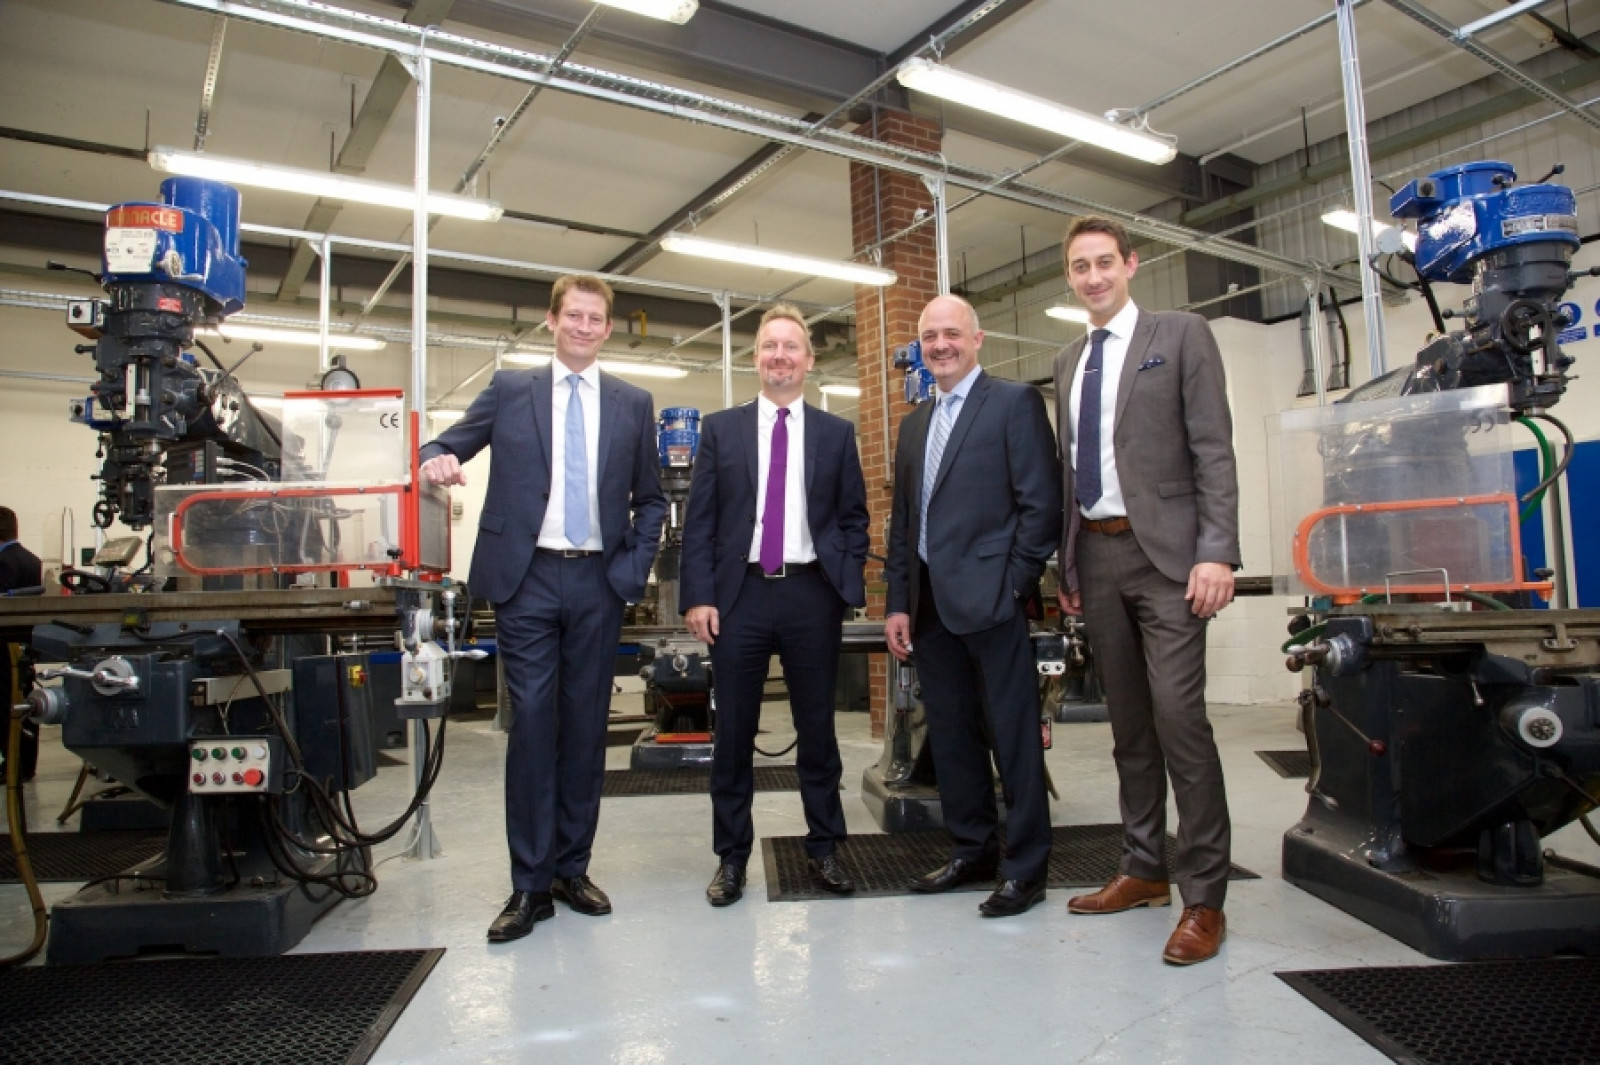 New training academy boosts Shropshires manufacturing skills